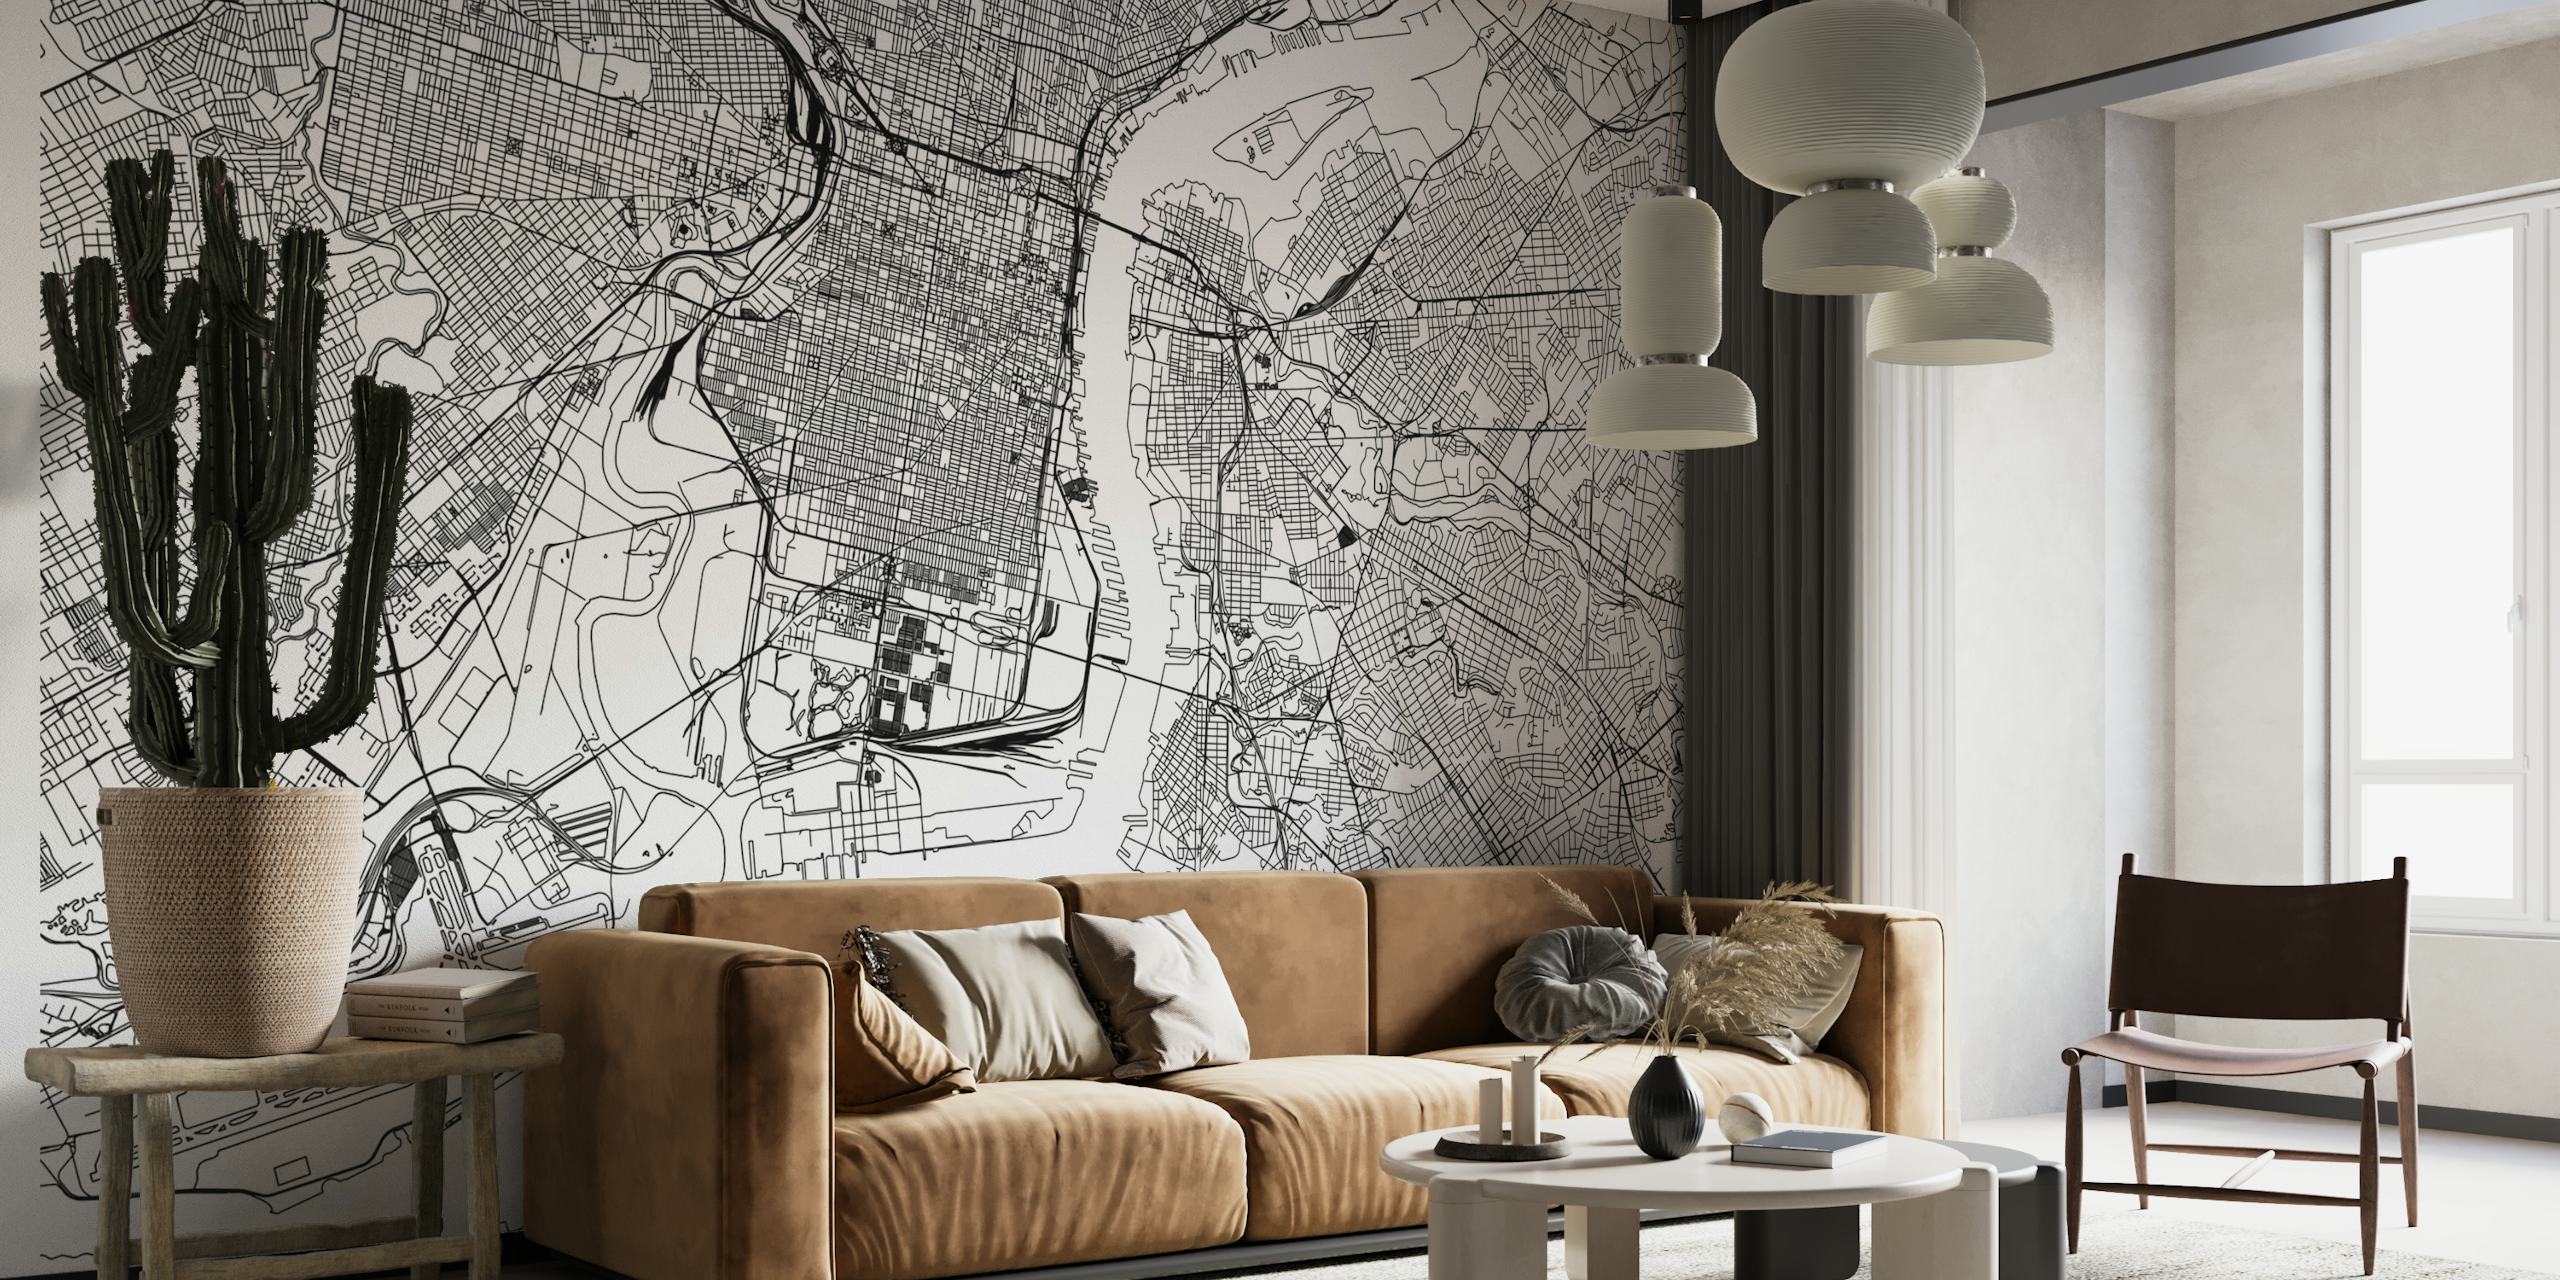 Unique Philadelphia City Map Wallpaper showcasing intricate map design